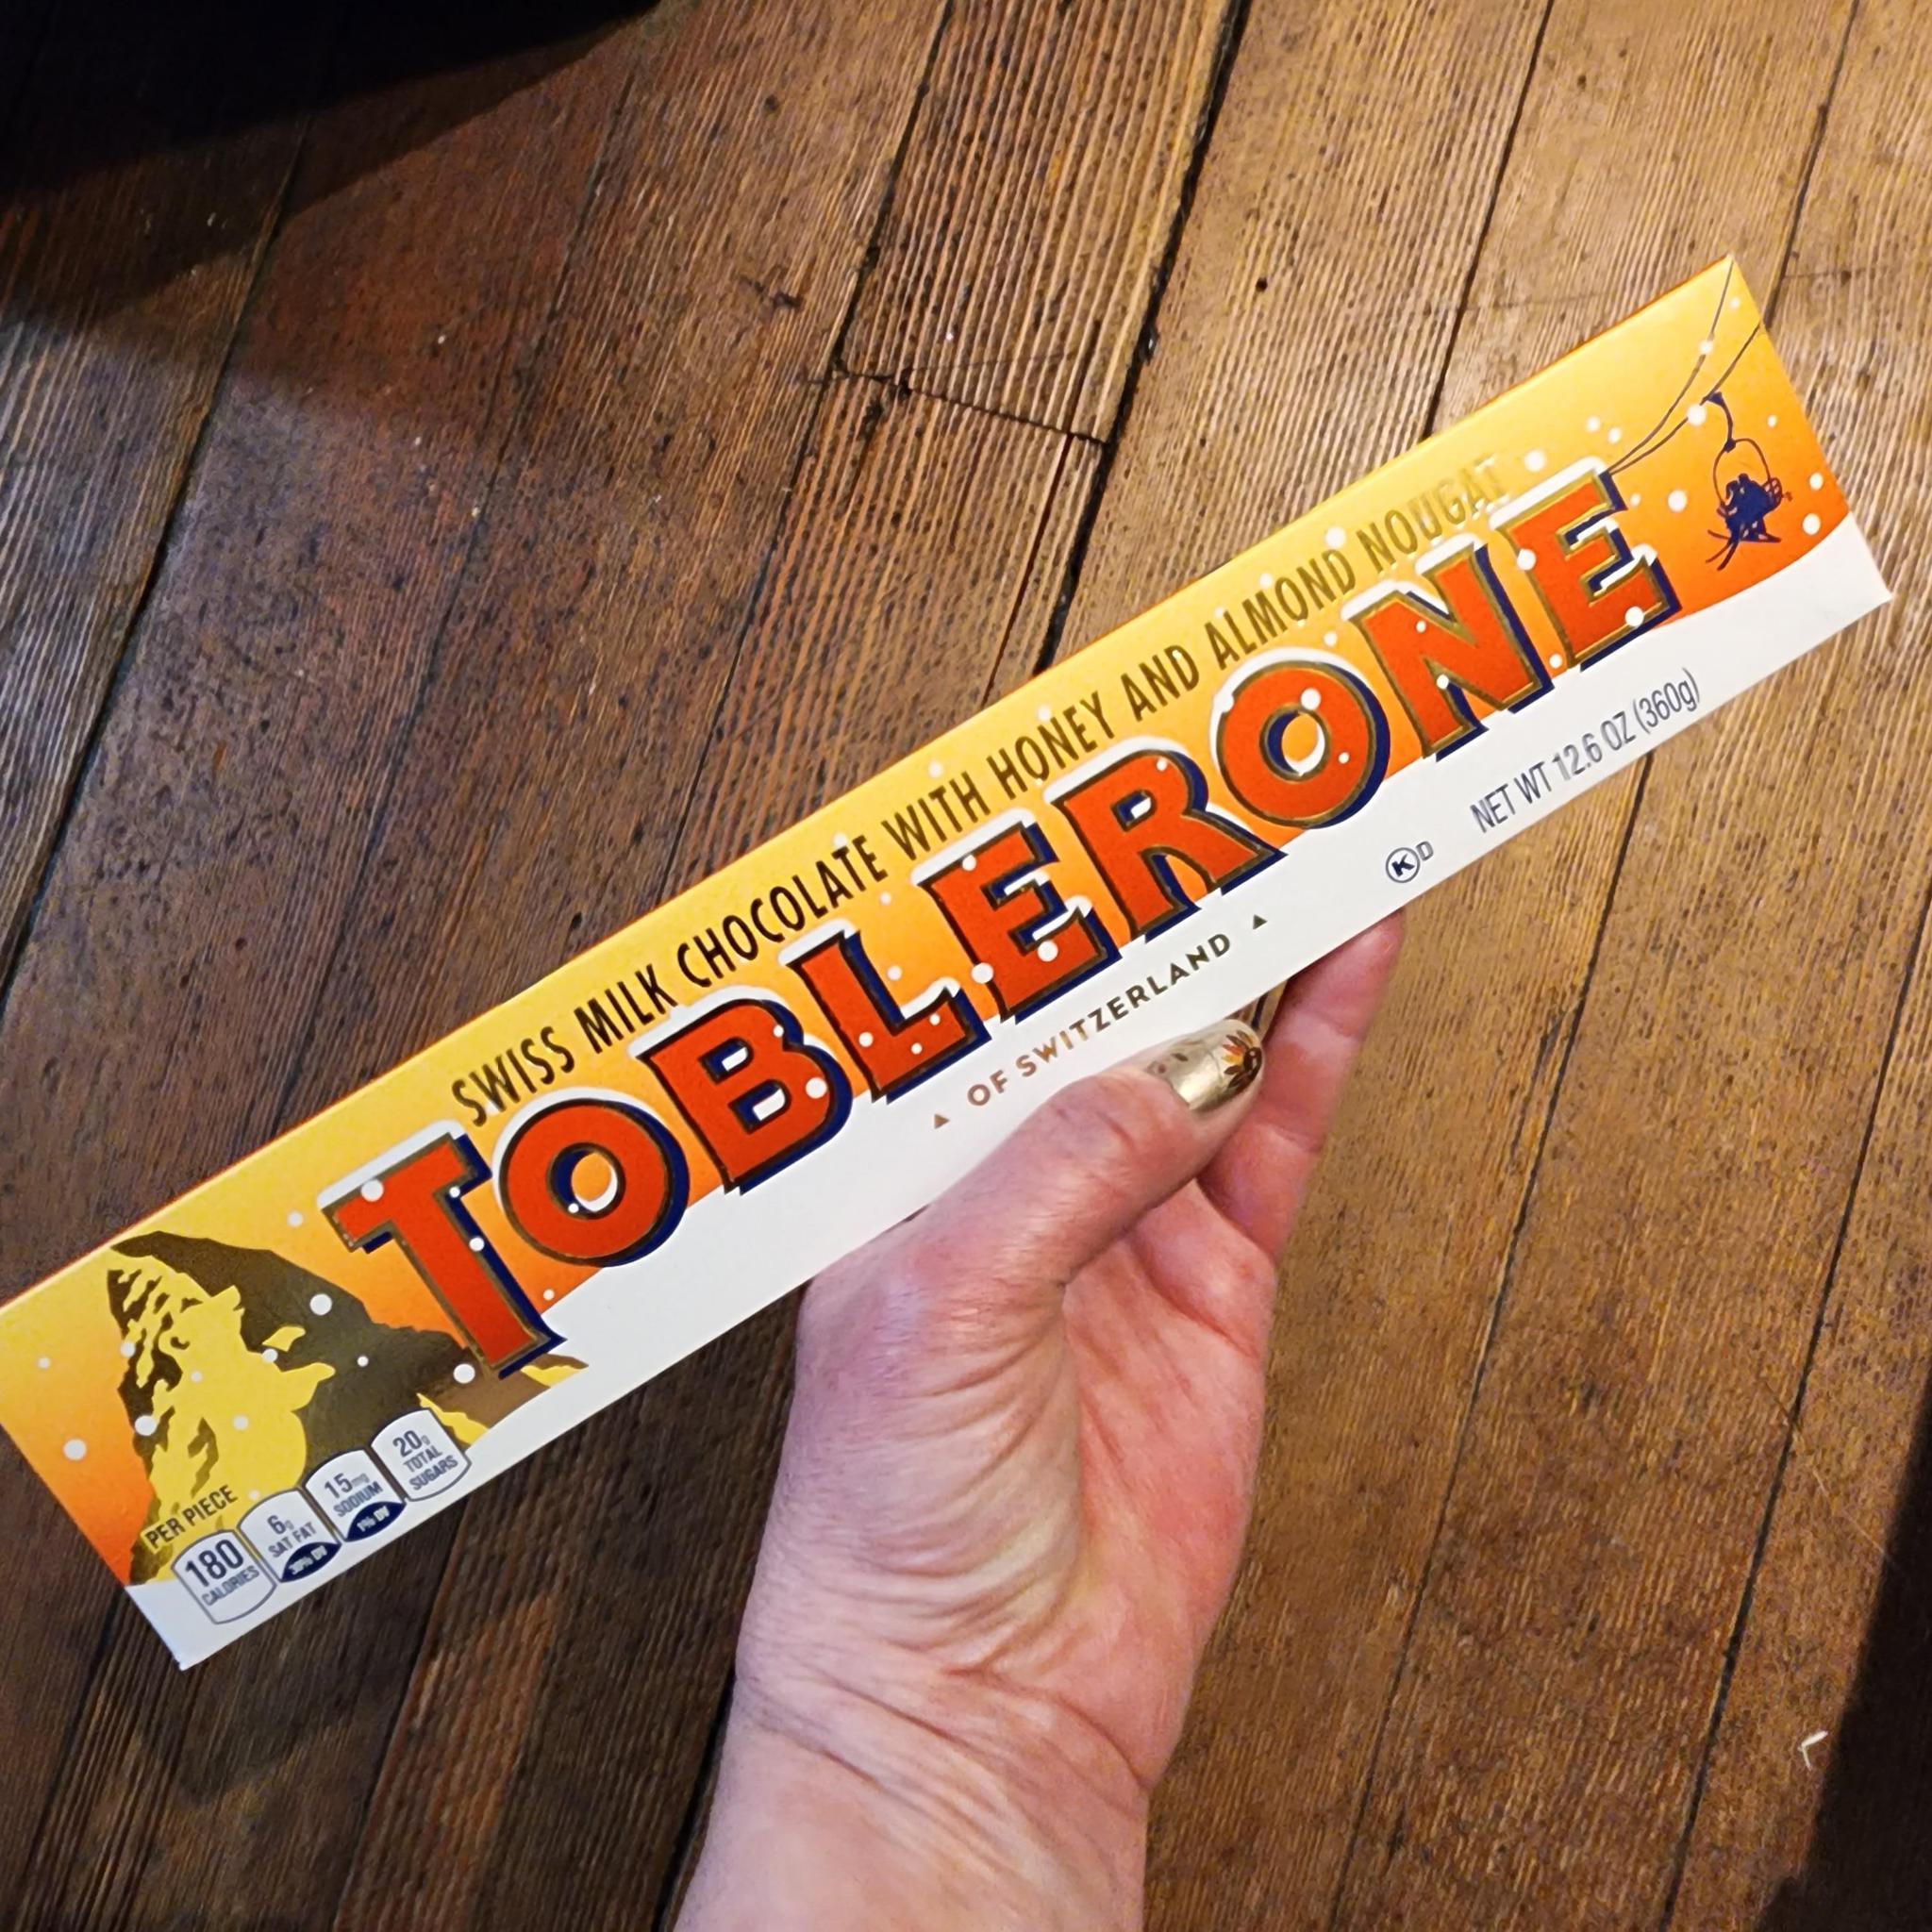 Toblerone Milk Chocolate, 12.6 oz (360g)